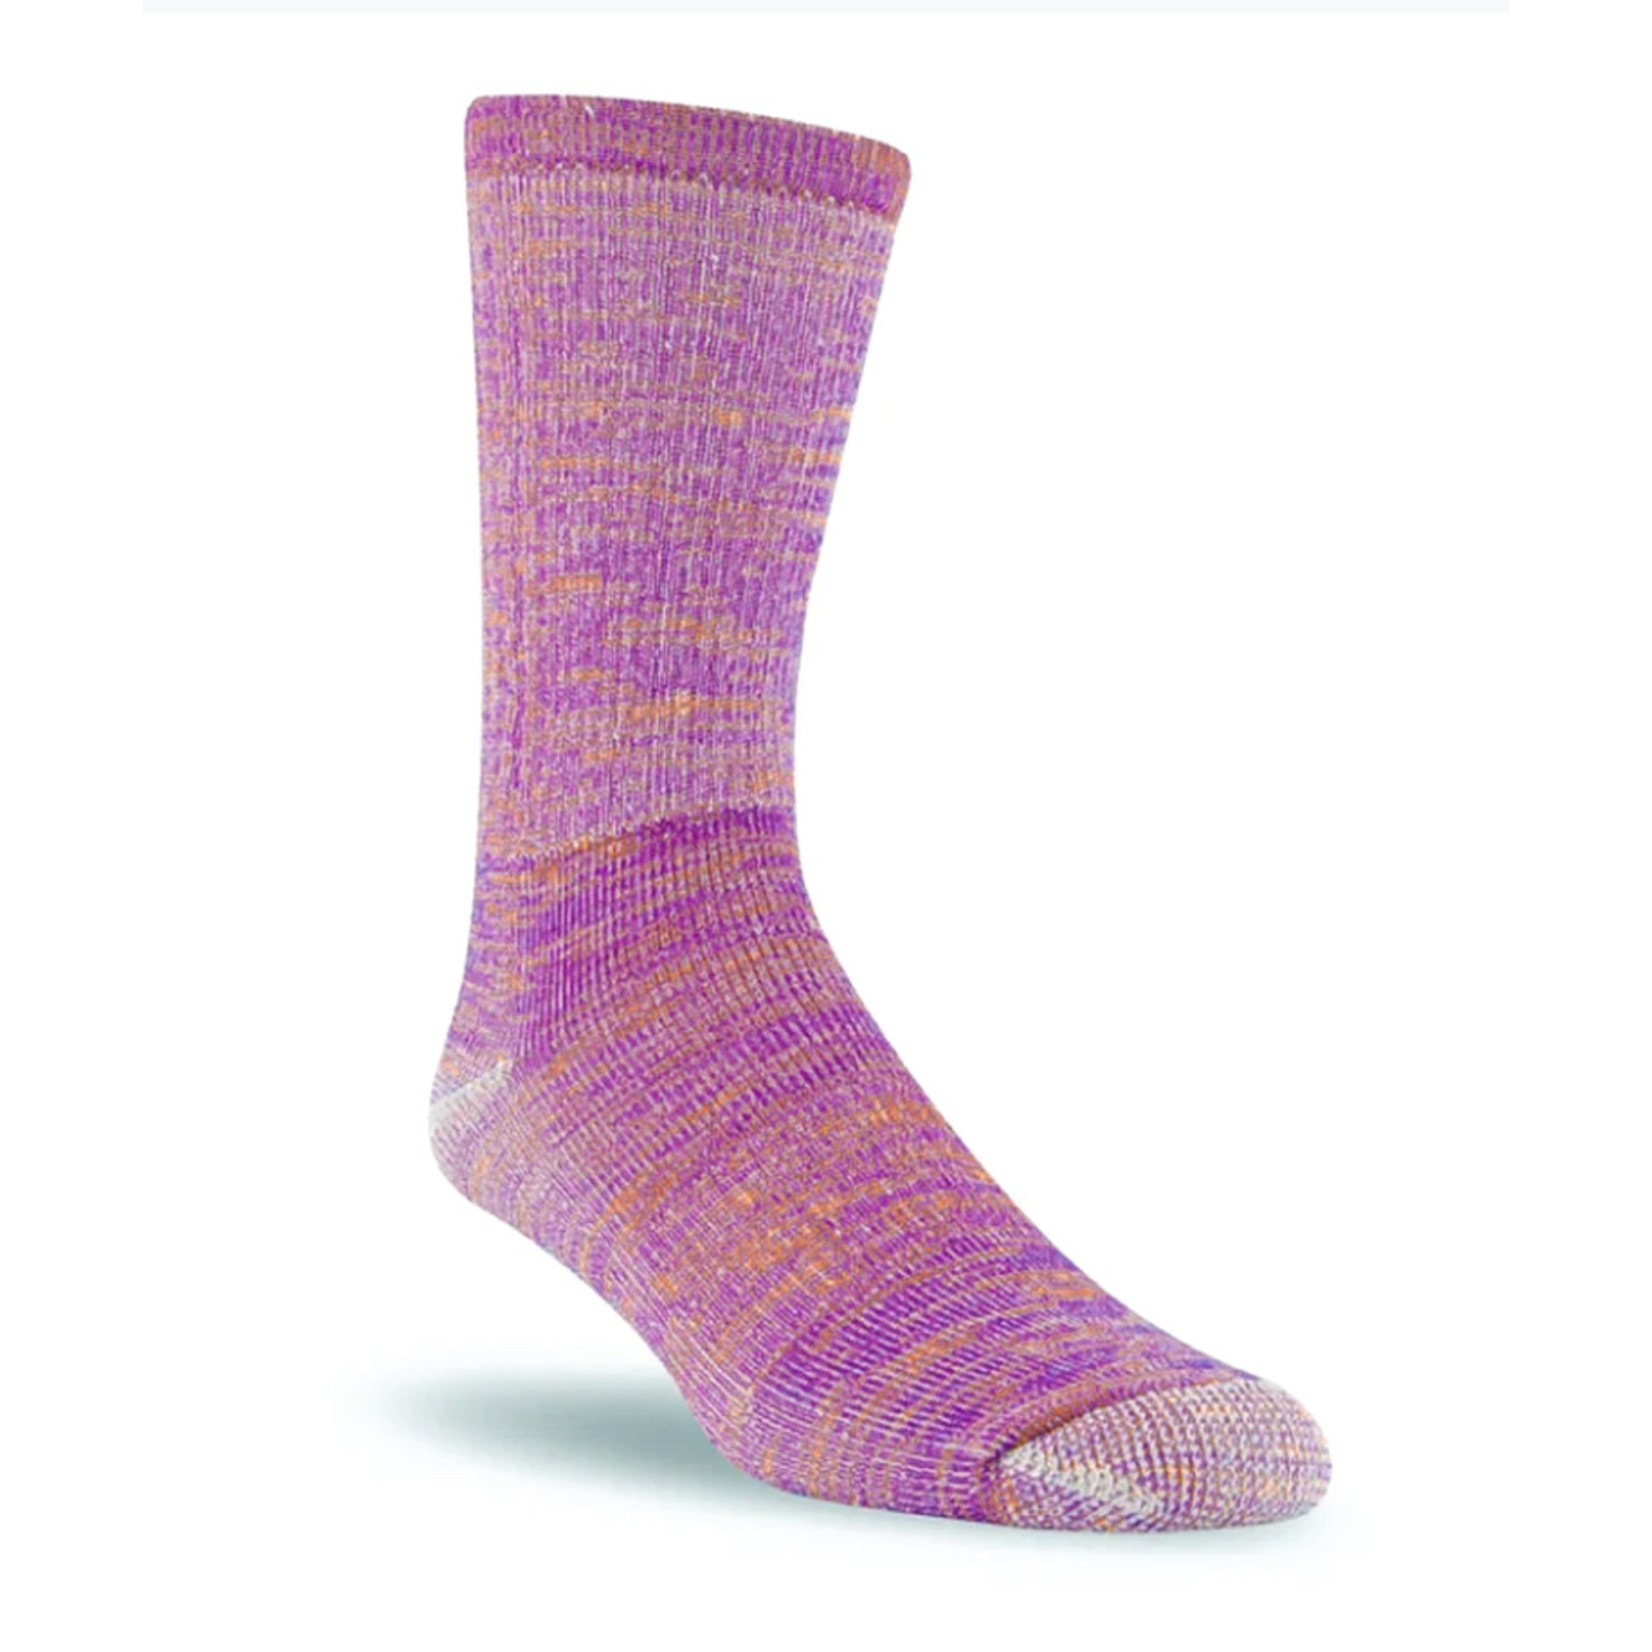 Uptown Sox Merino Wool Socks Orange/Purple